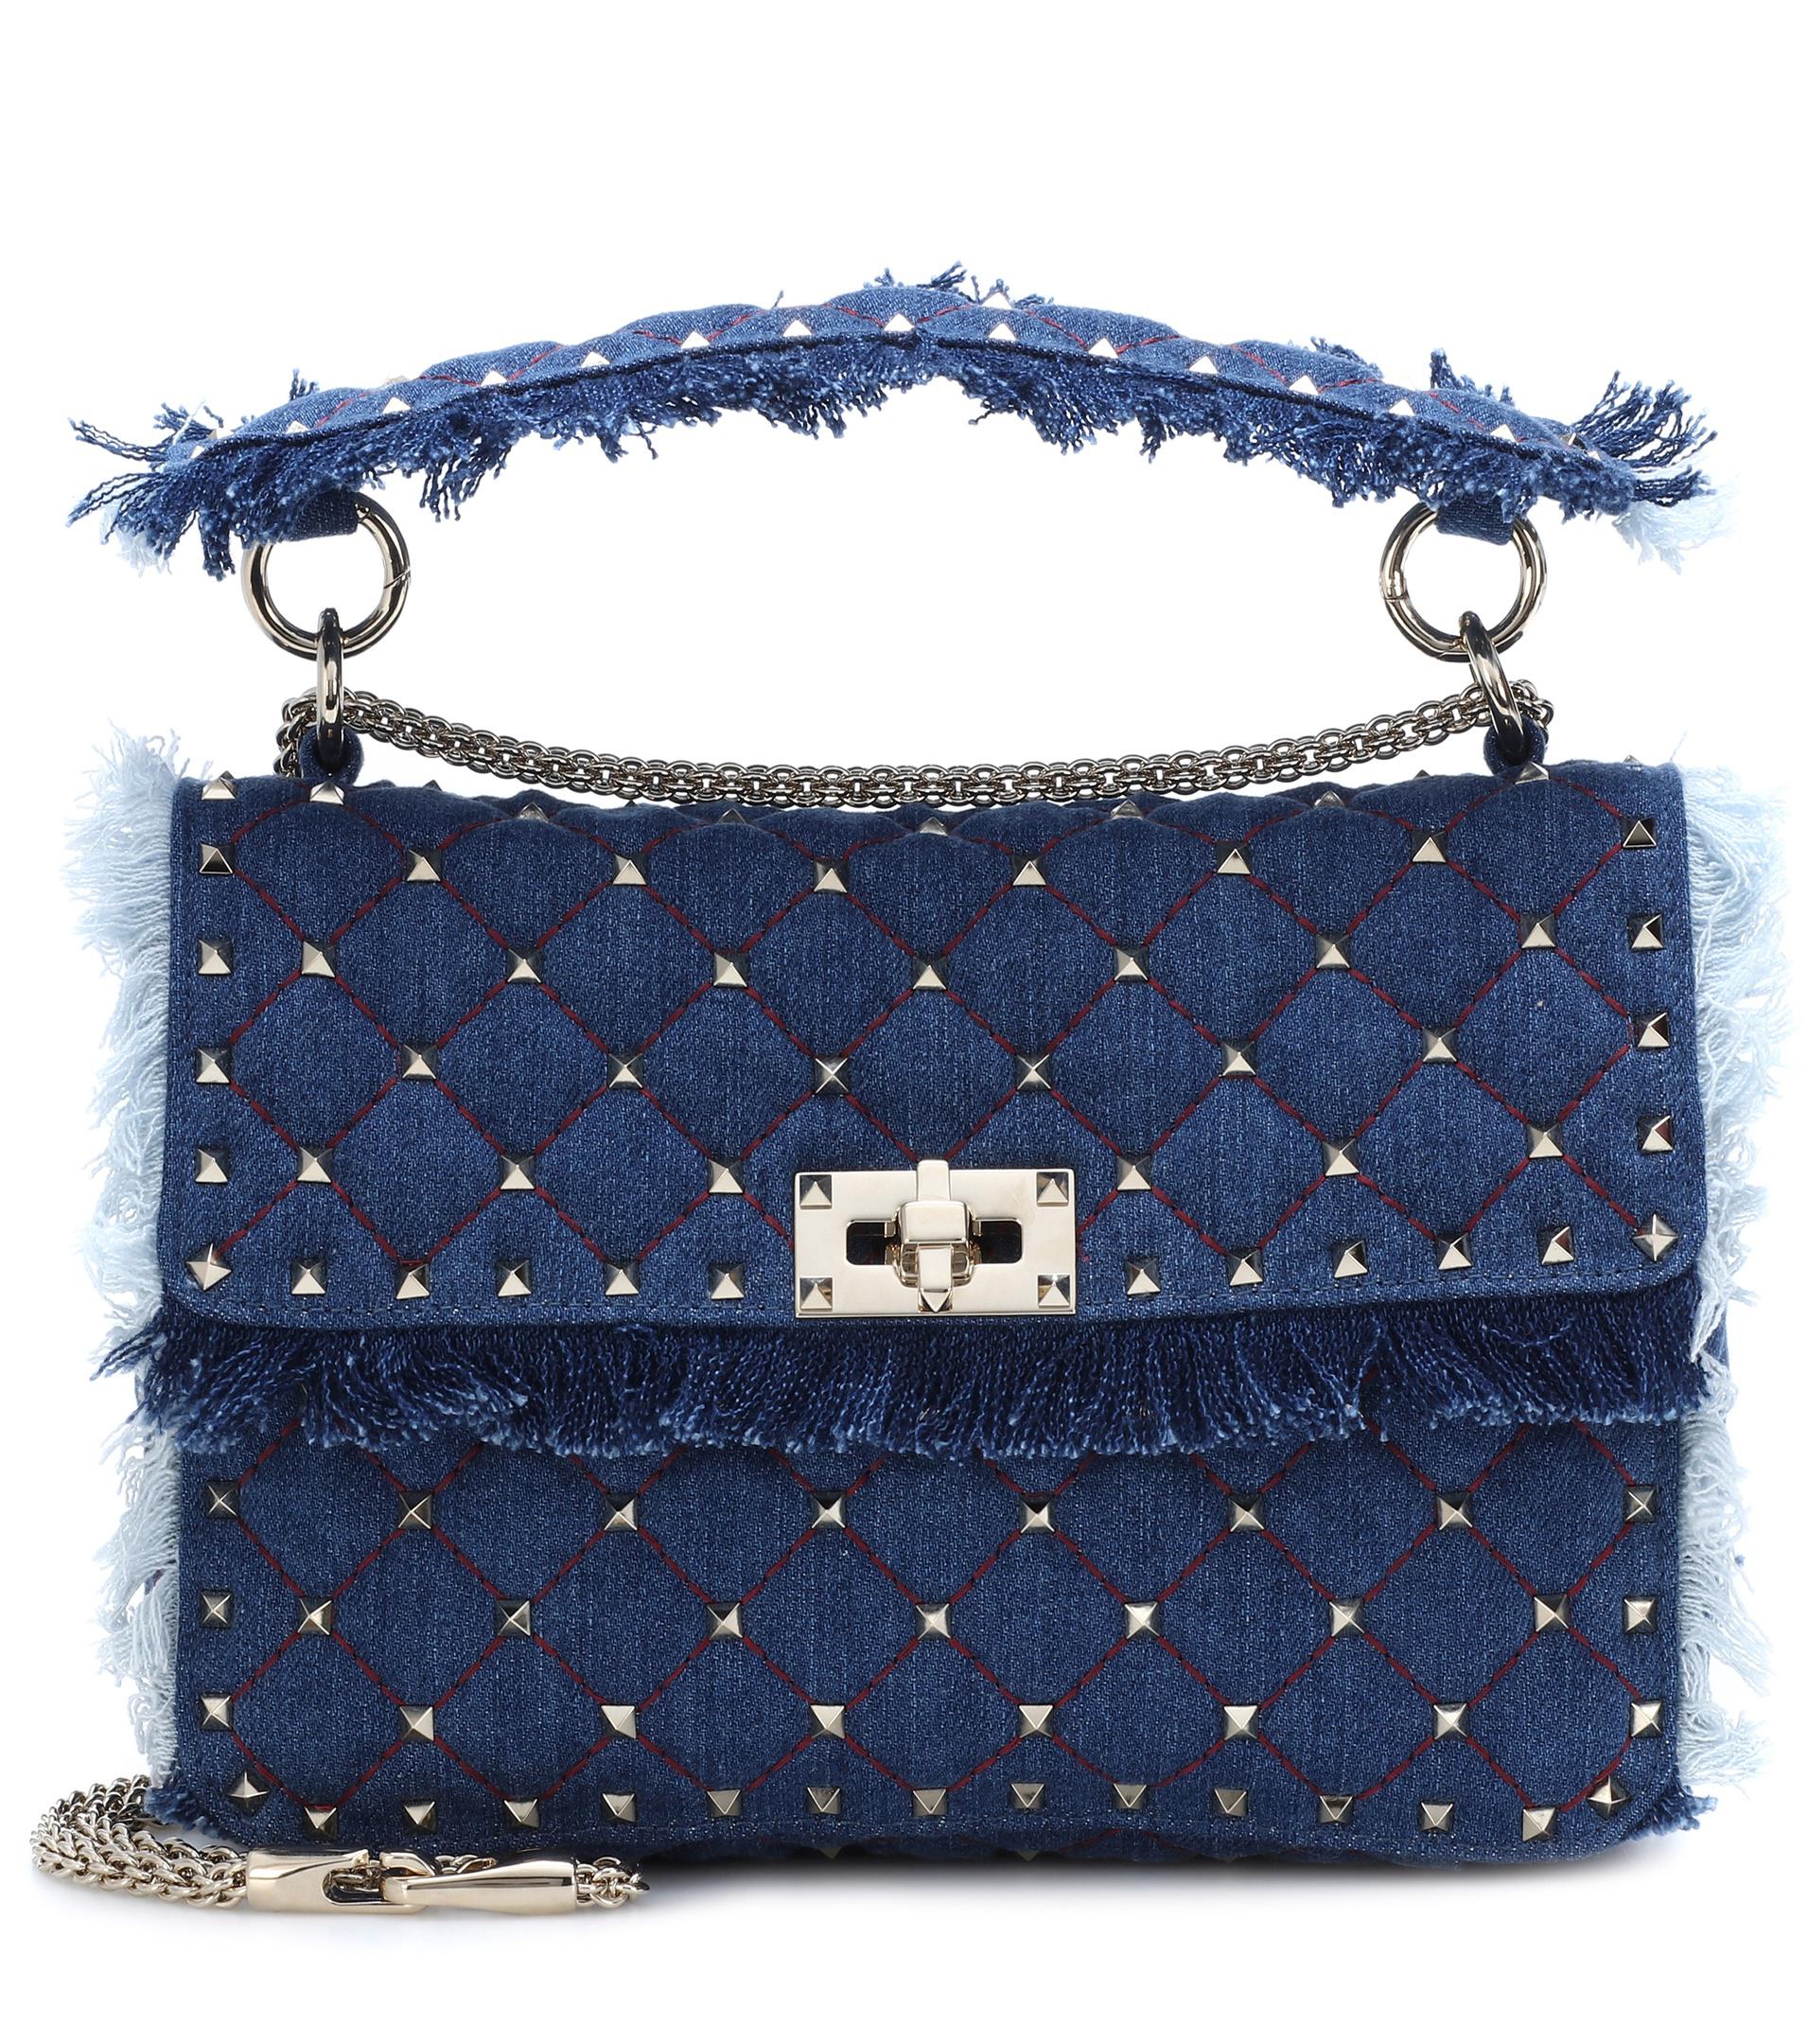 Valentino Rockstud Spike Medium Denim Shoulder Bag in Blue - Lyst